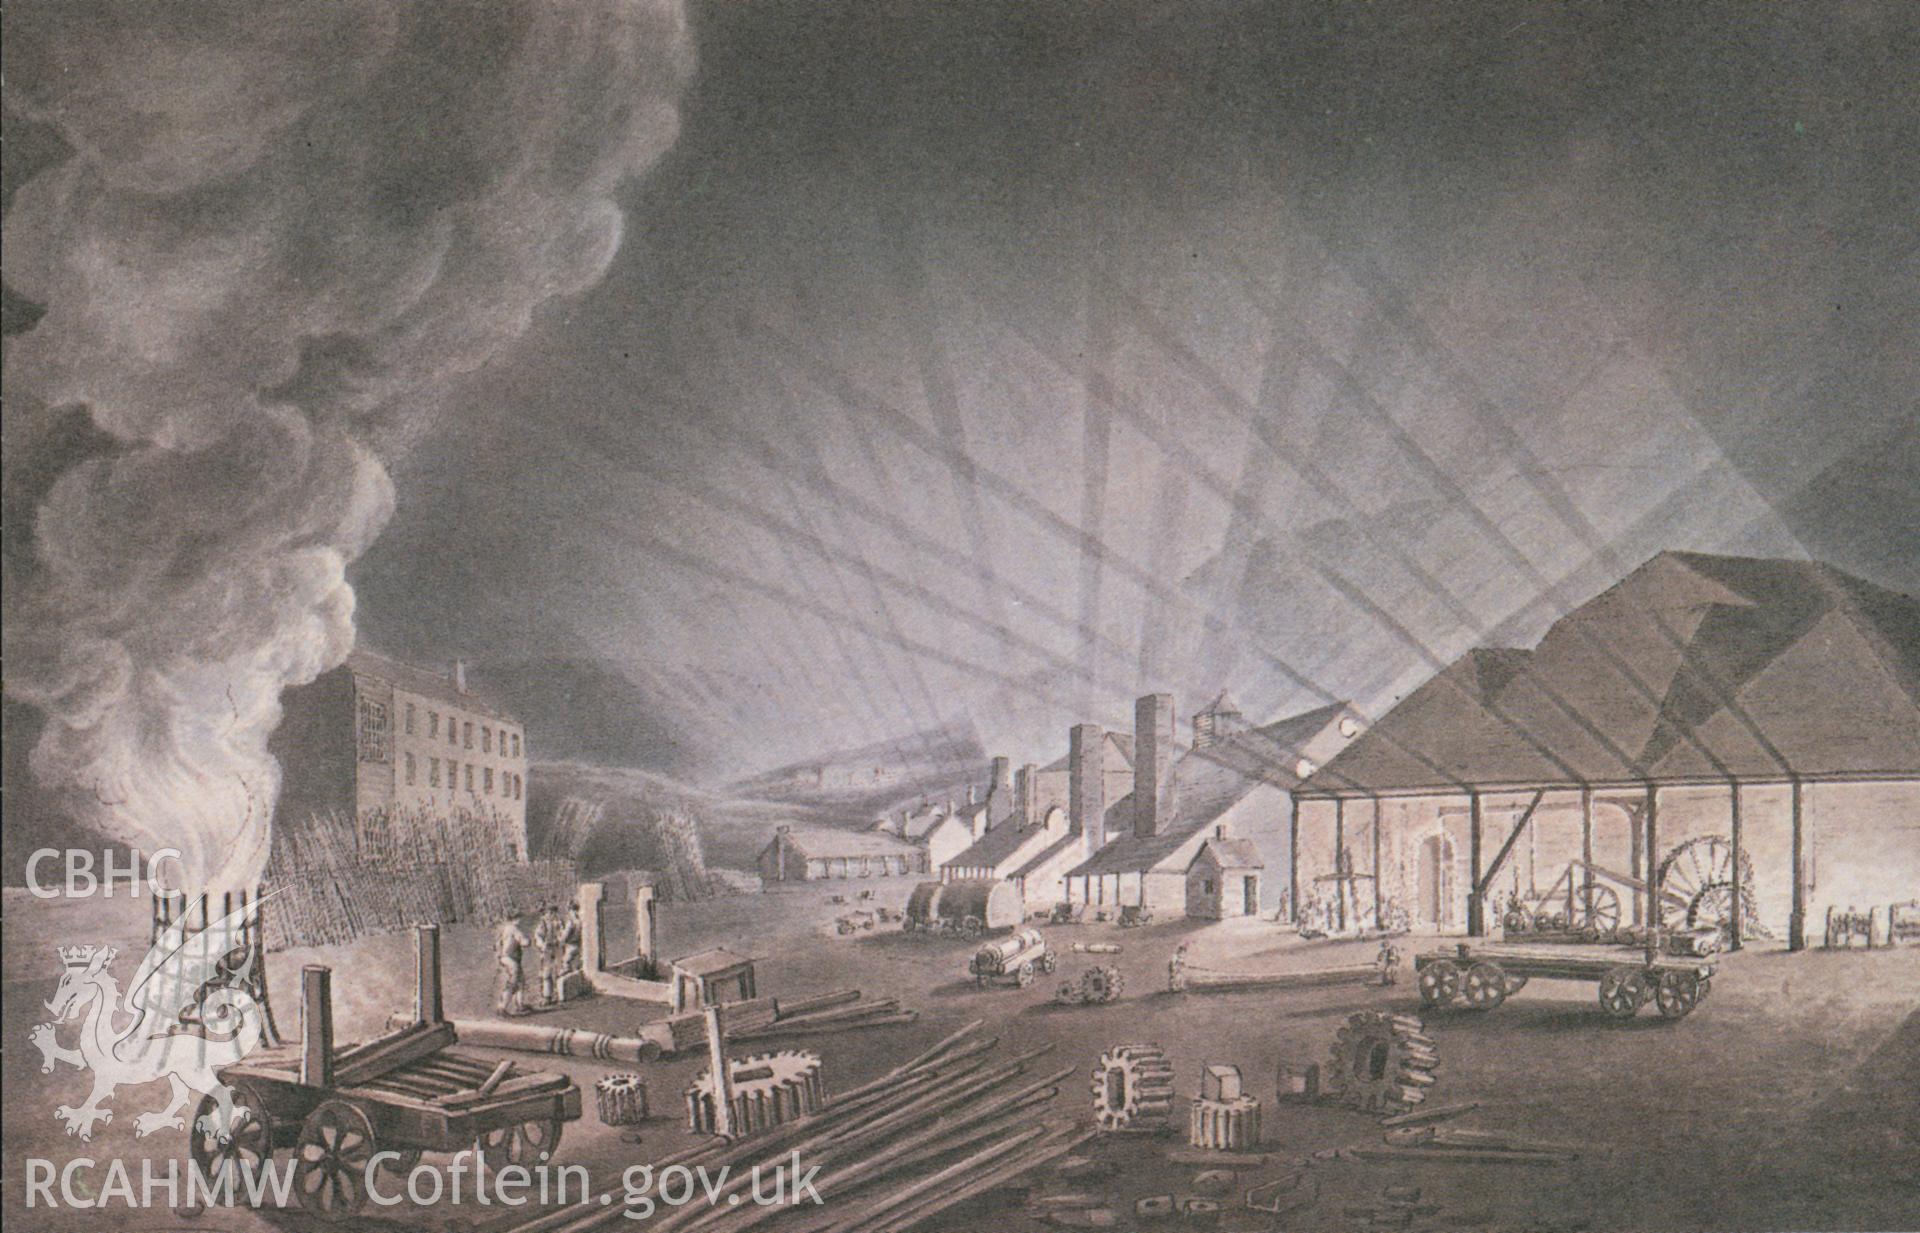 Digital copy of a postcard view of watercolour picture of Cyfarthfa ironworks, Merthyr Tydfil at night 1819.